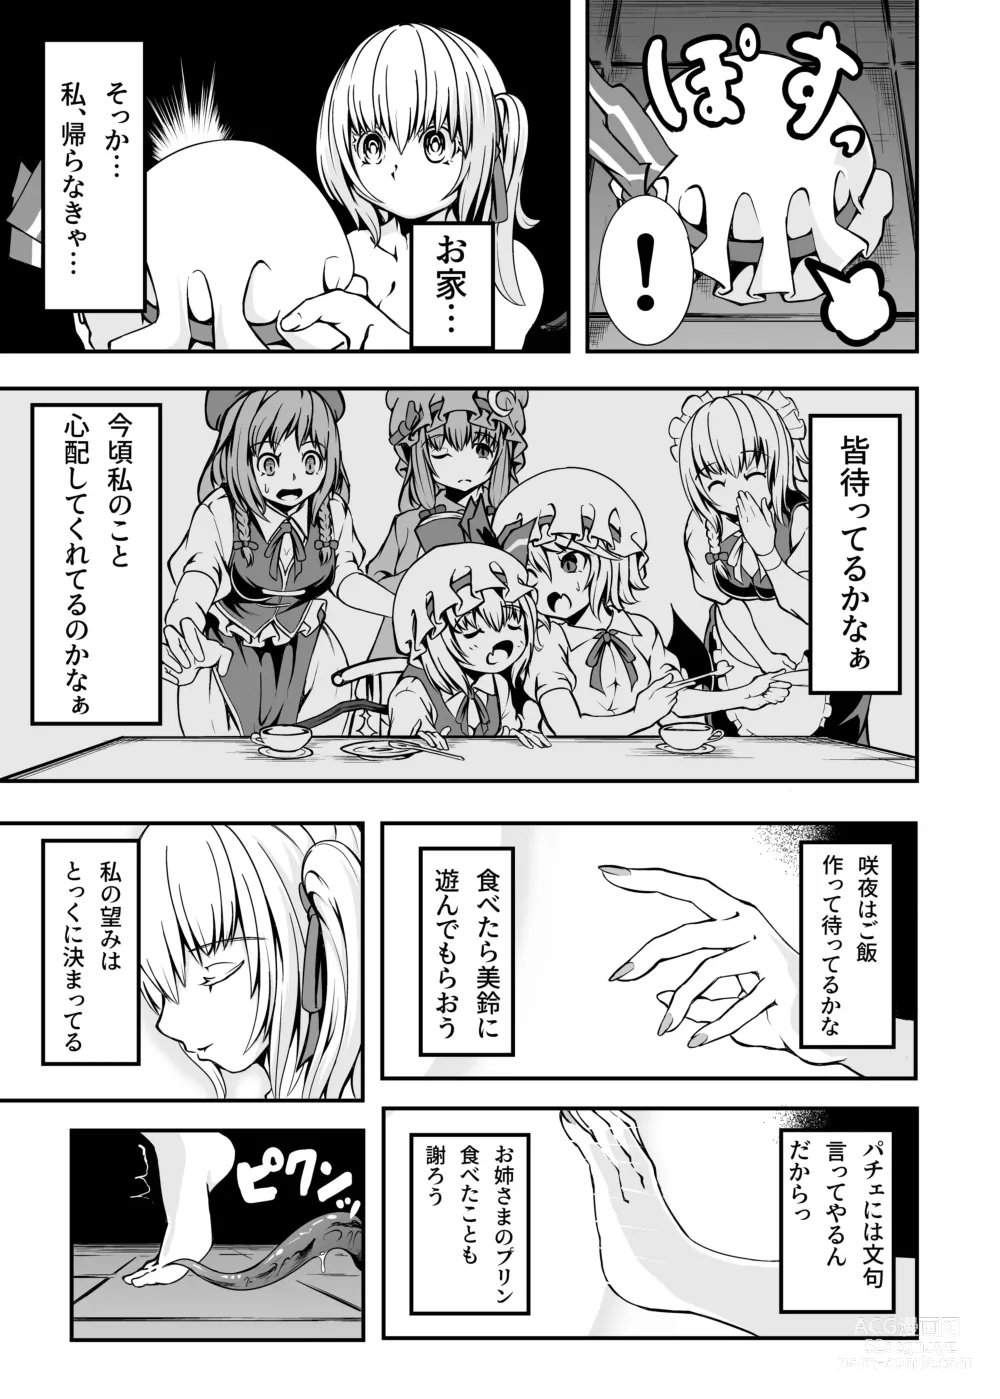 Page 18 of doujinshi Flan-chan and ETD